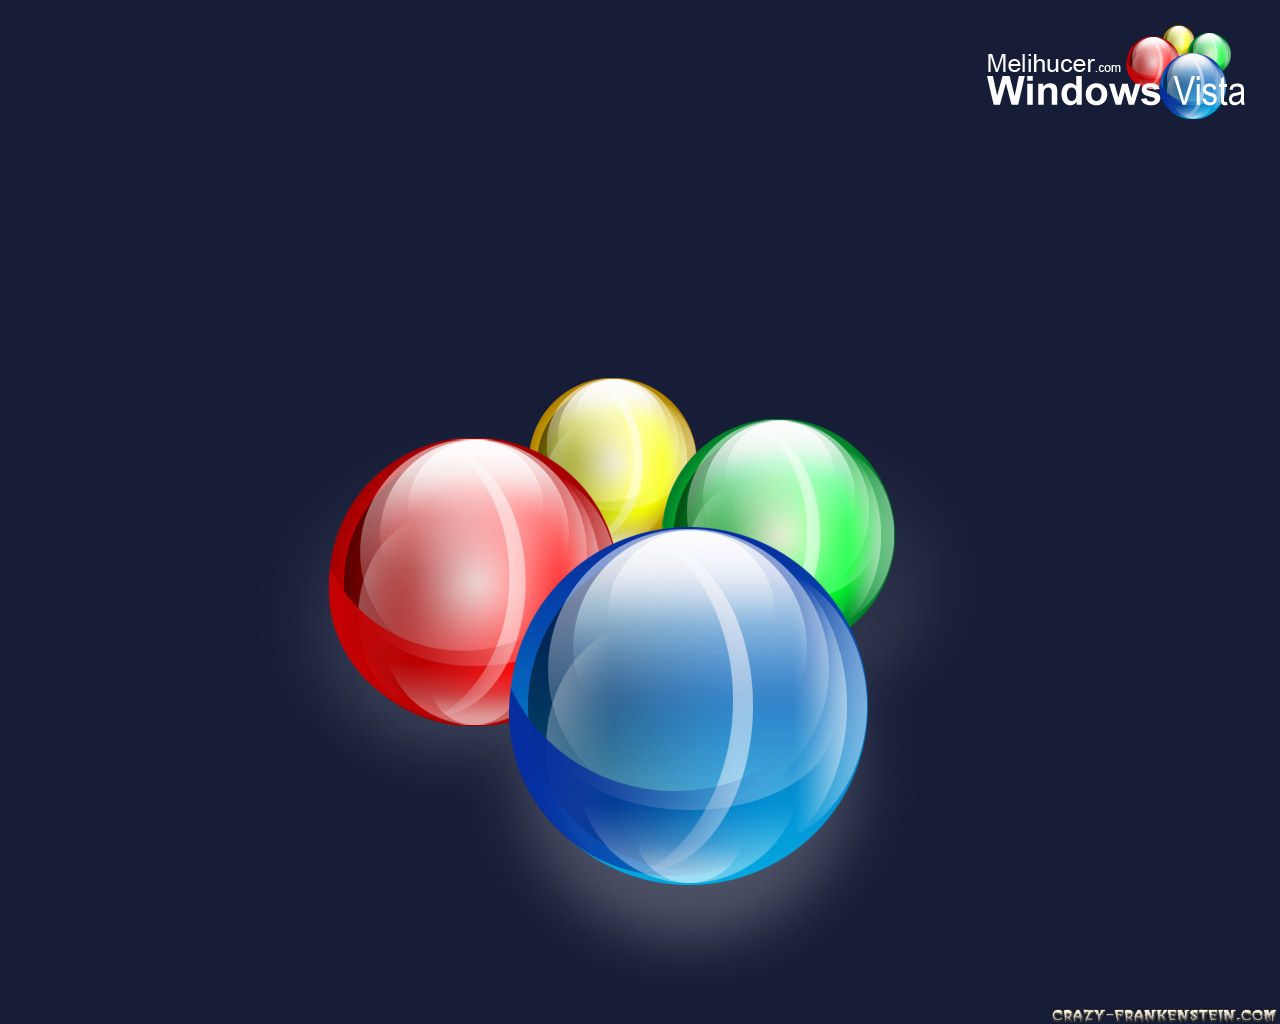 Windows Vista - Computer wallpapers - Crazy Frankenstein